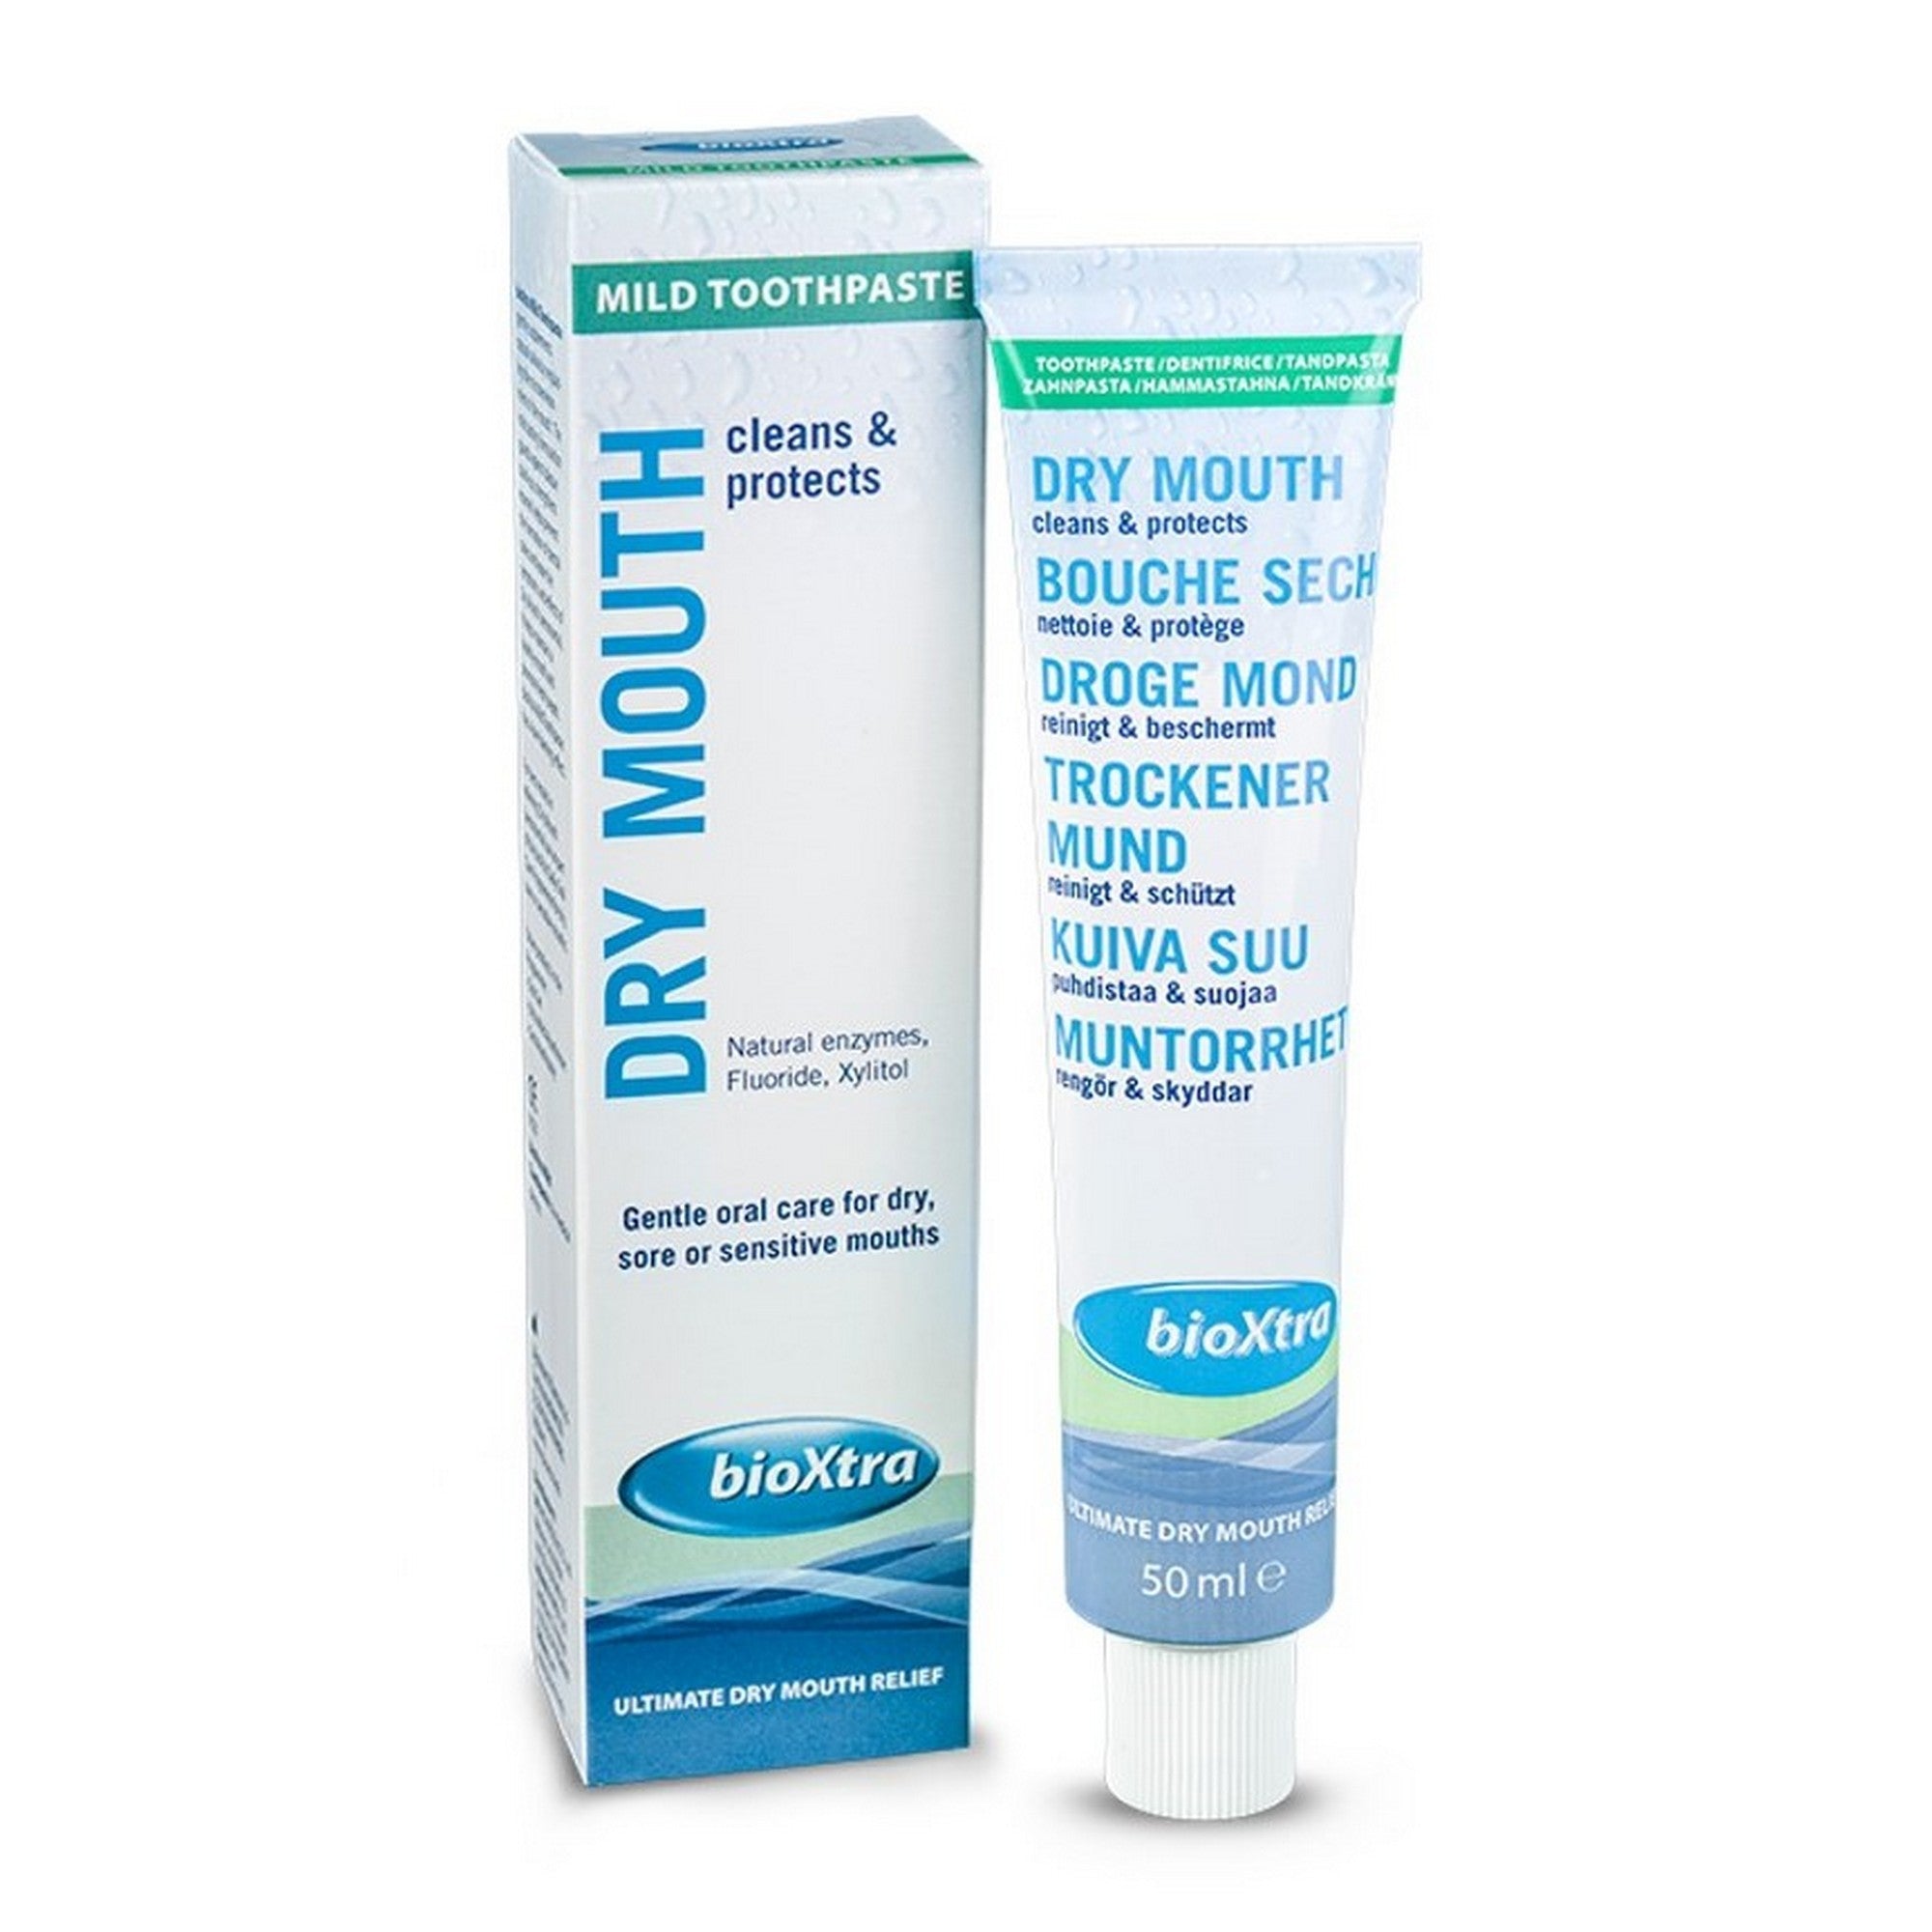 BioXtra Dry Mouth Mild Toothpaste